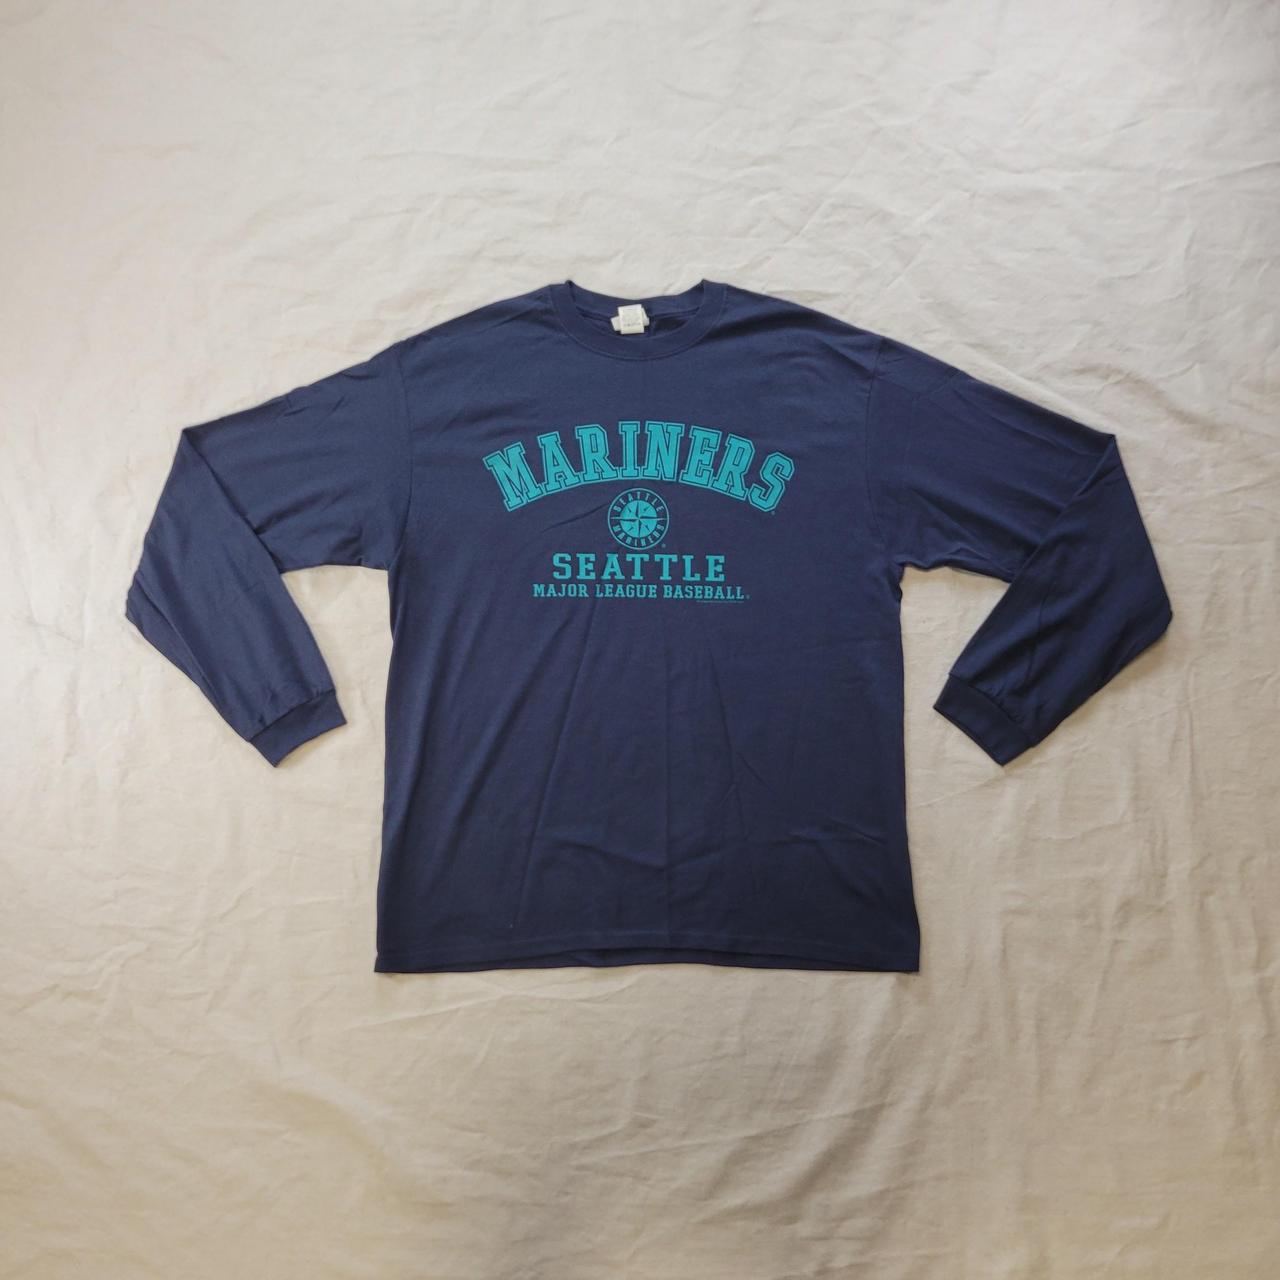 Seattle Mariners Electric Factory Shirt - Lelemoon